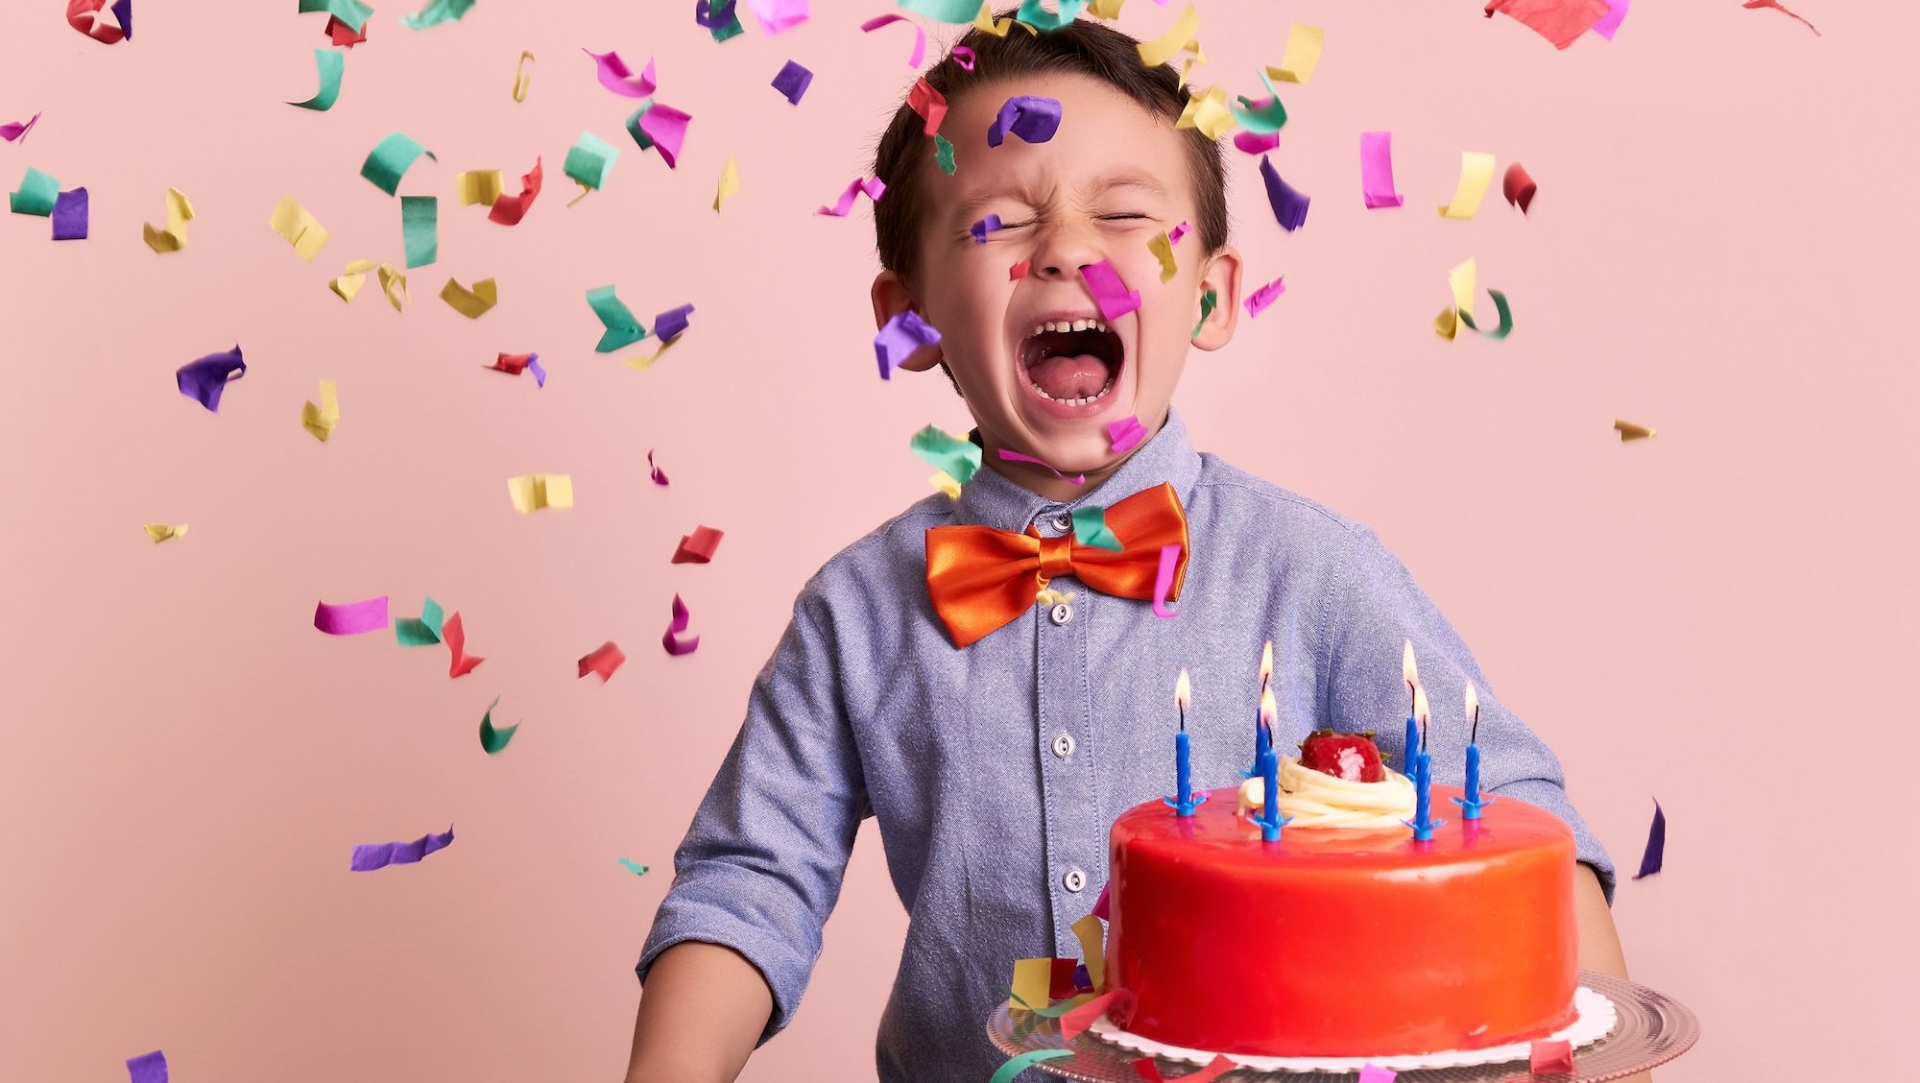 10 Least Common Birthdays in the World